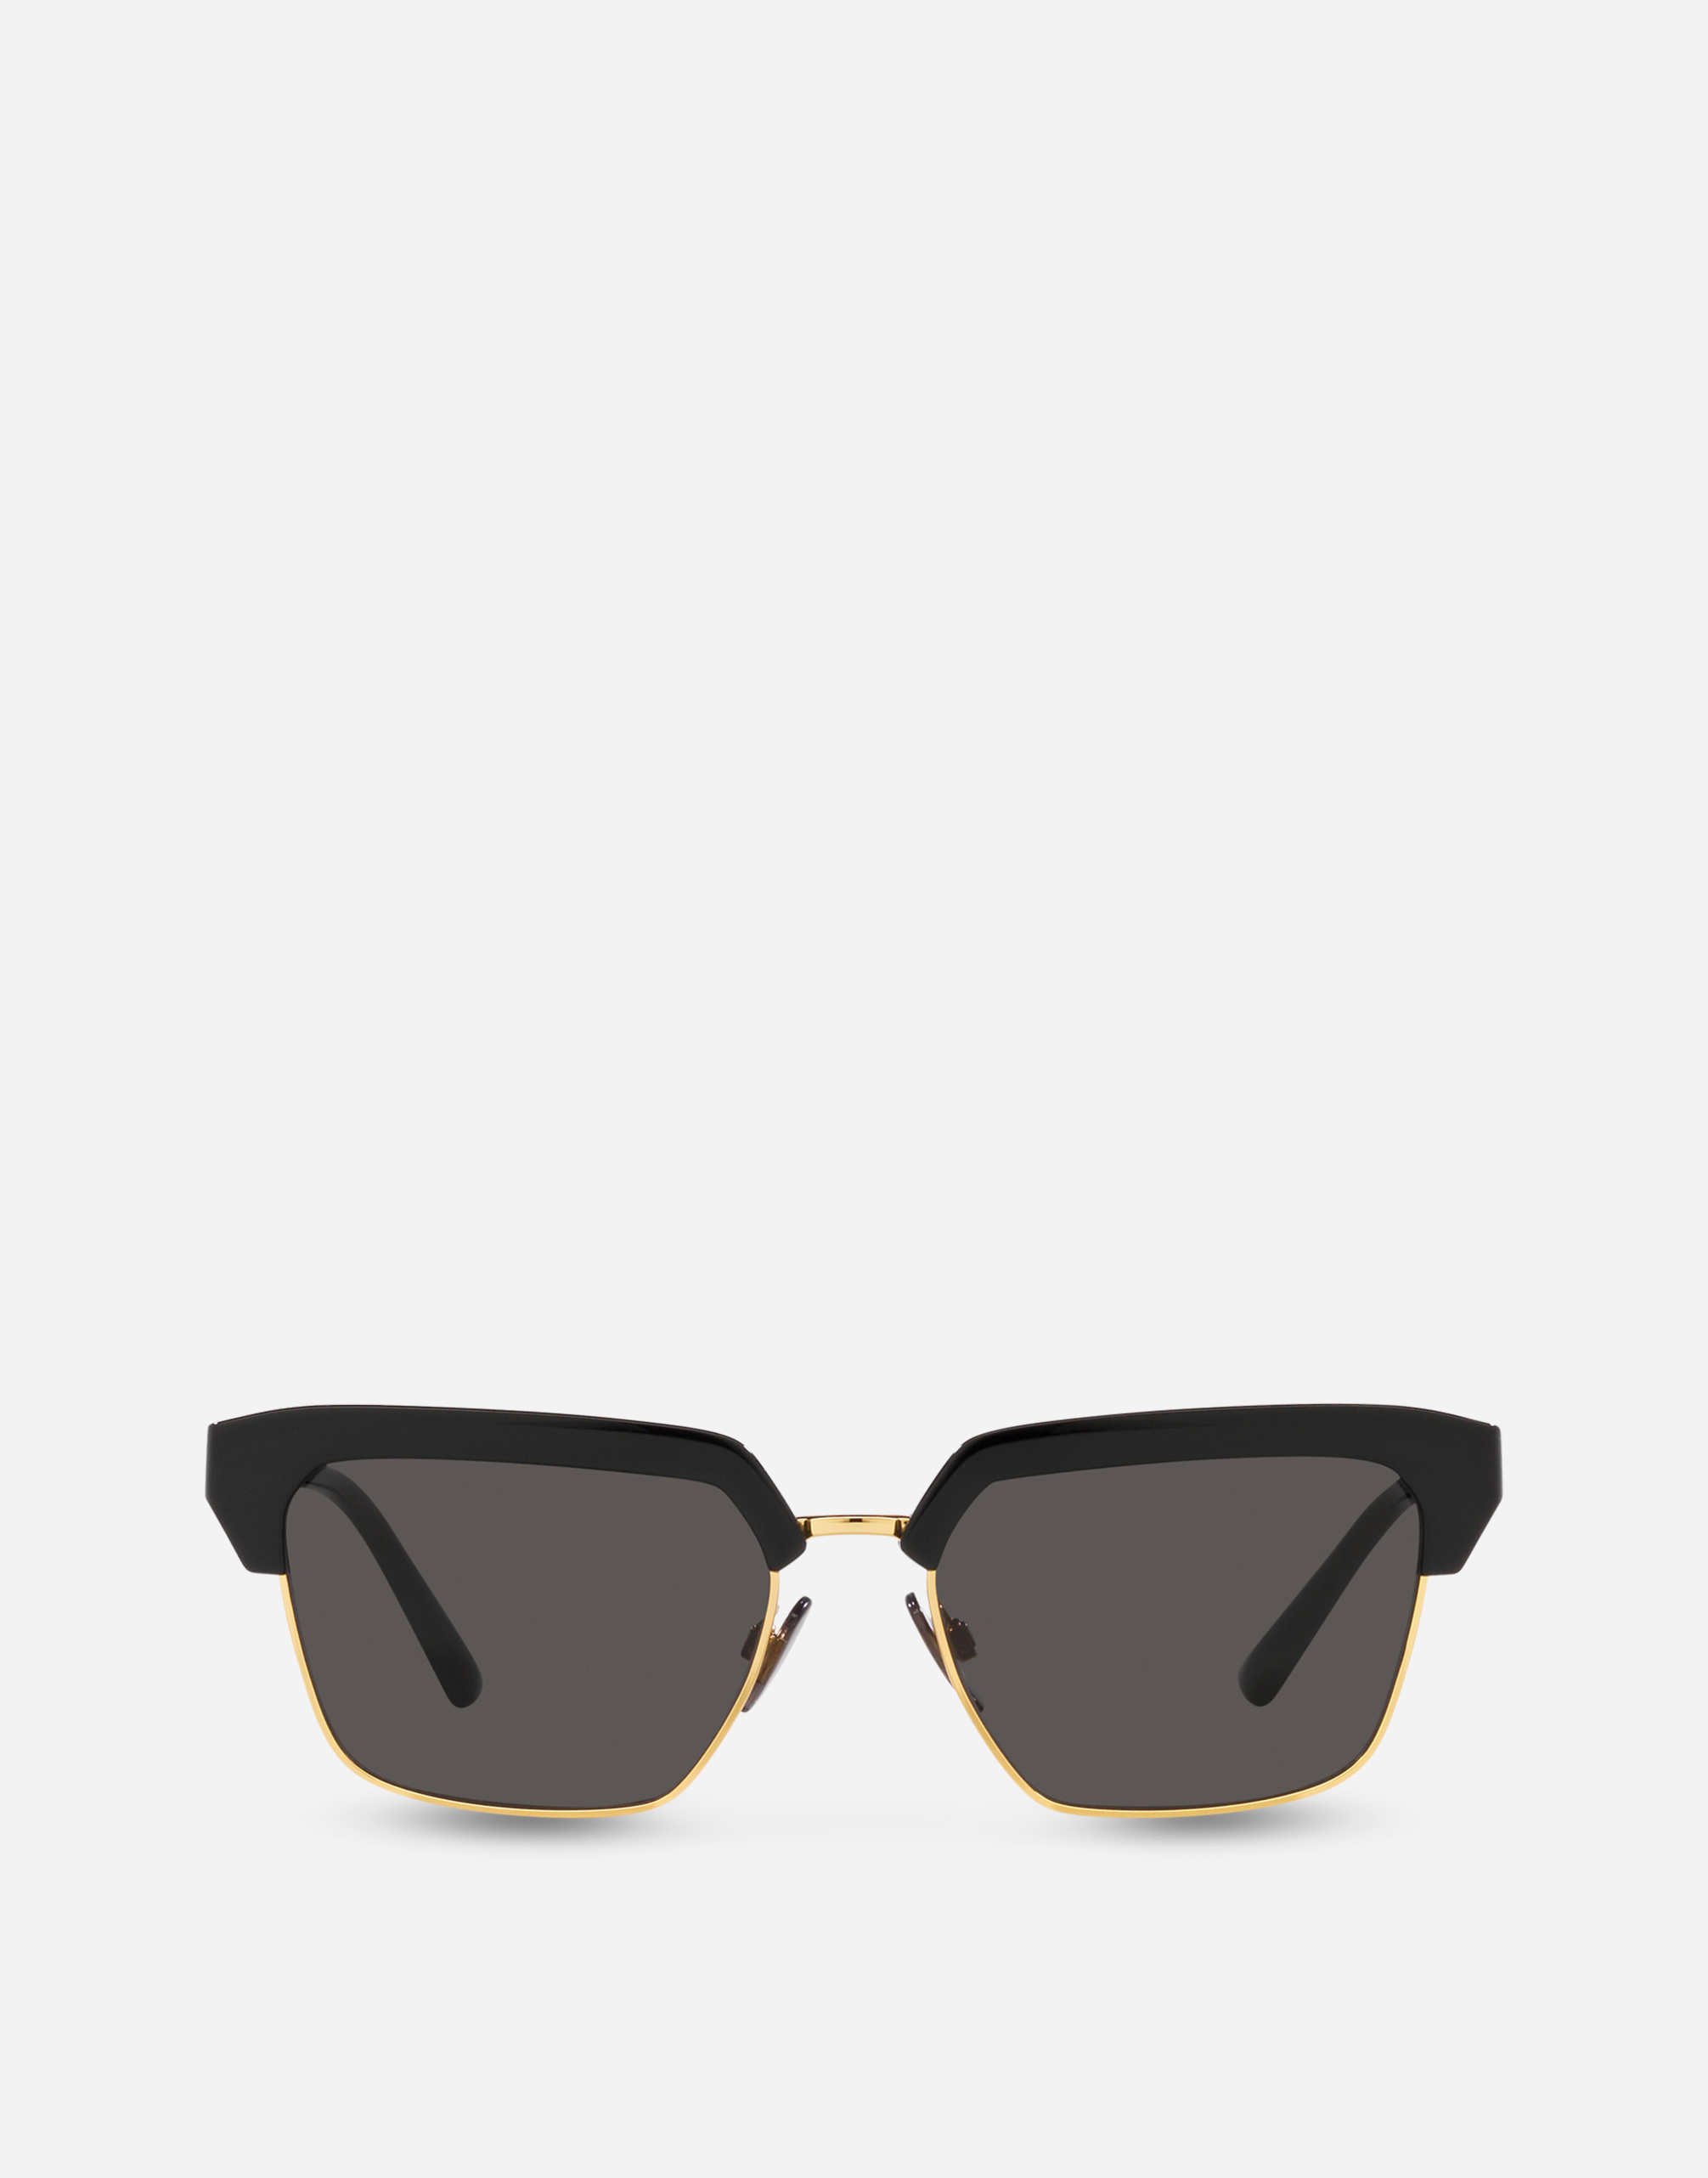 Dark Sicily Sunglasses in Gold